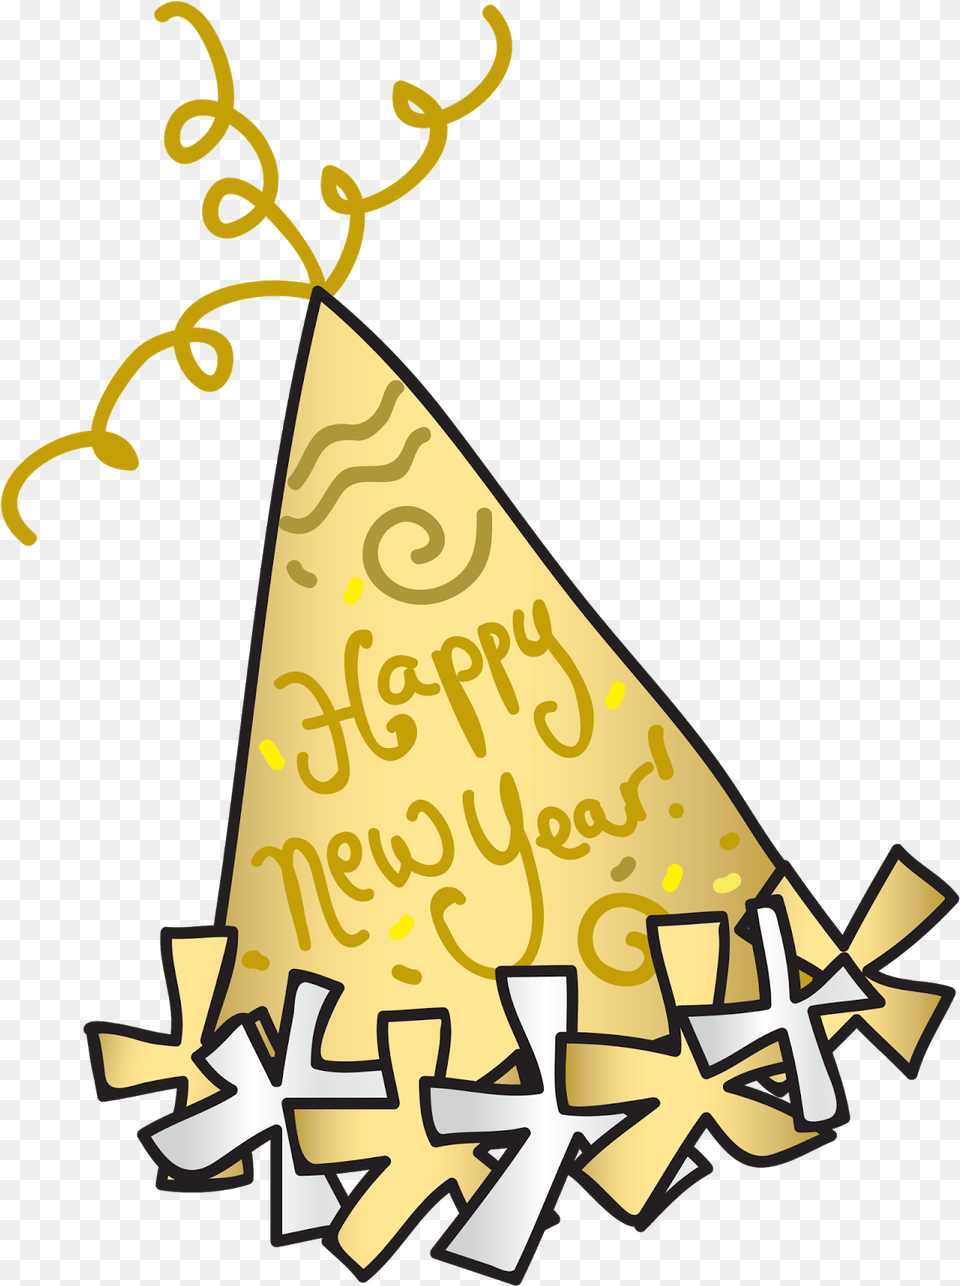 New Years Eve Clipart New Years Eve Clipart, Clothing, Hat, Dynamite, Party Hat Png Image